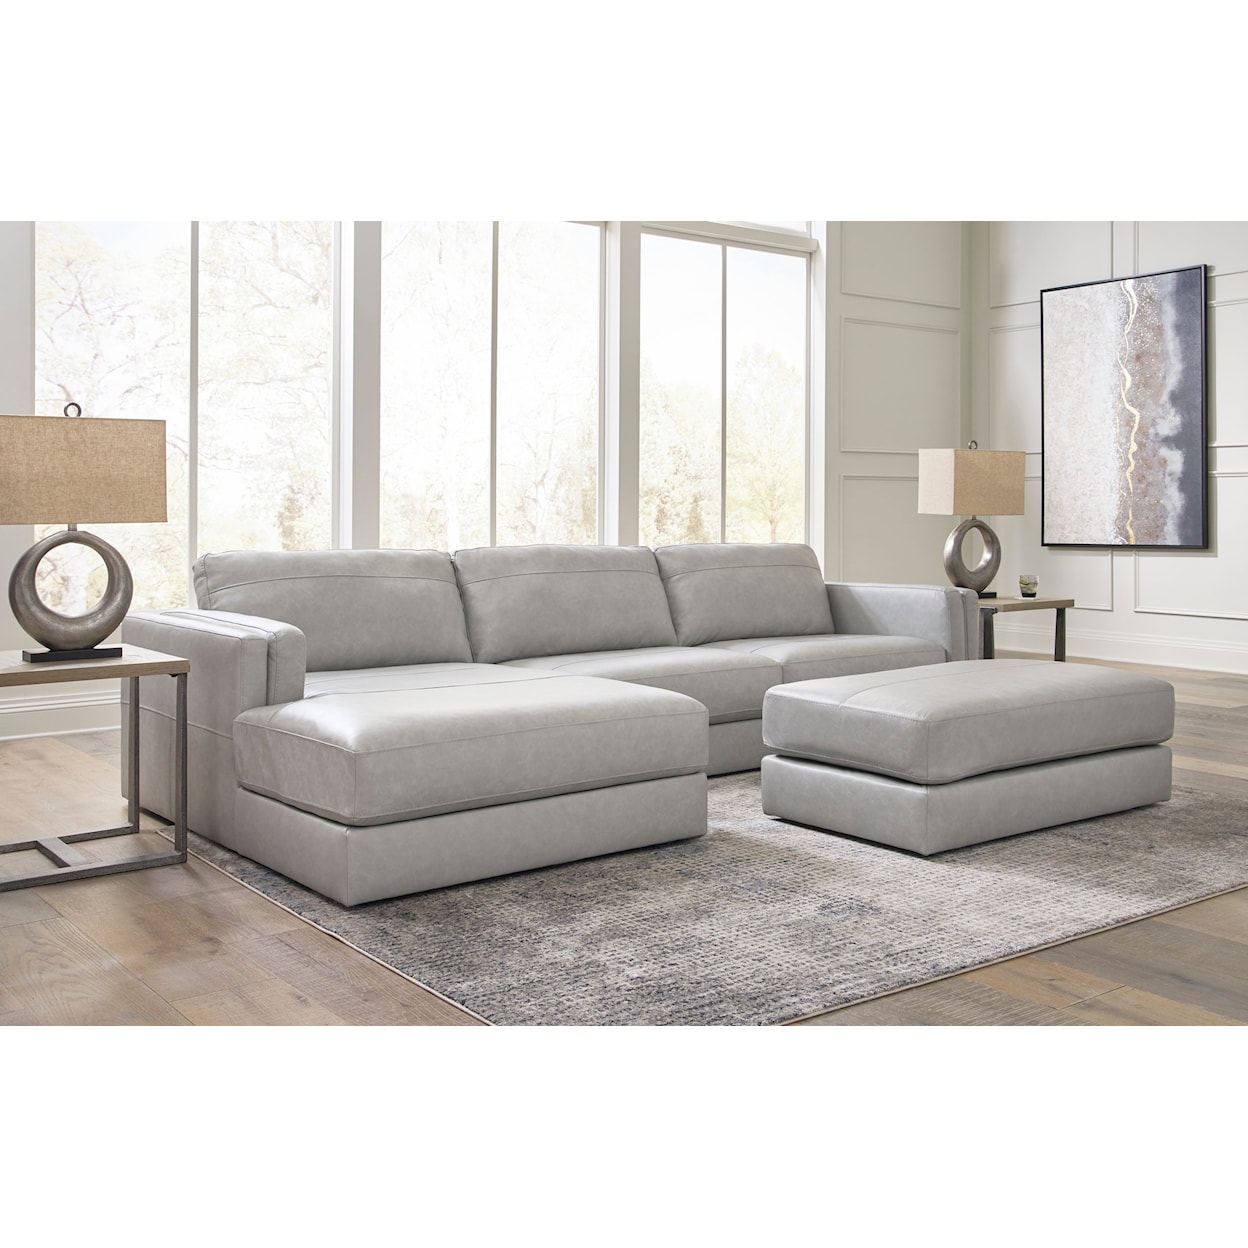 Ashley Furniture Signature Design Amiata Living Room Set